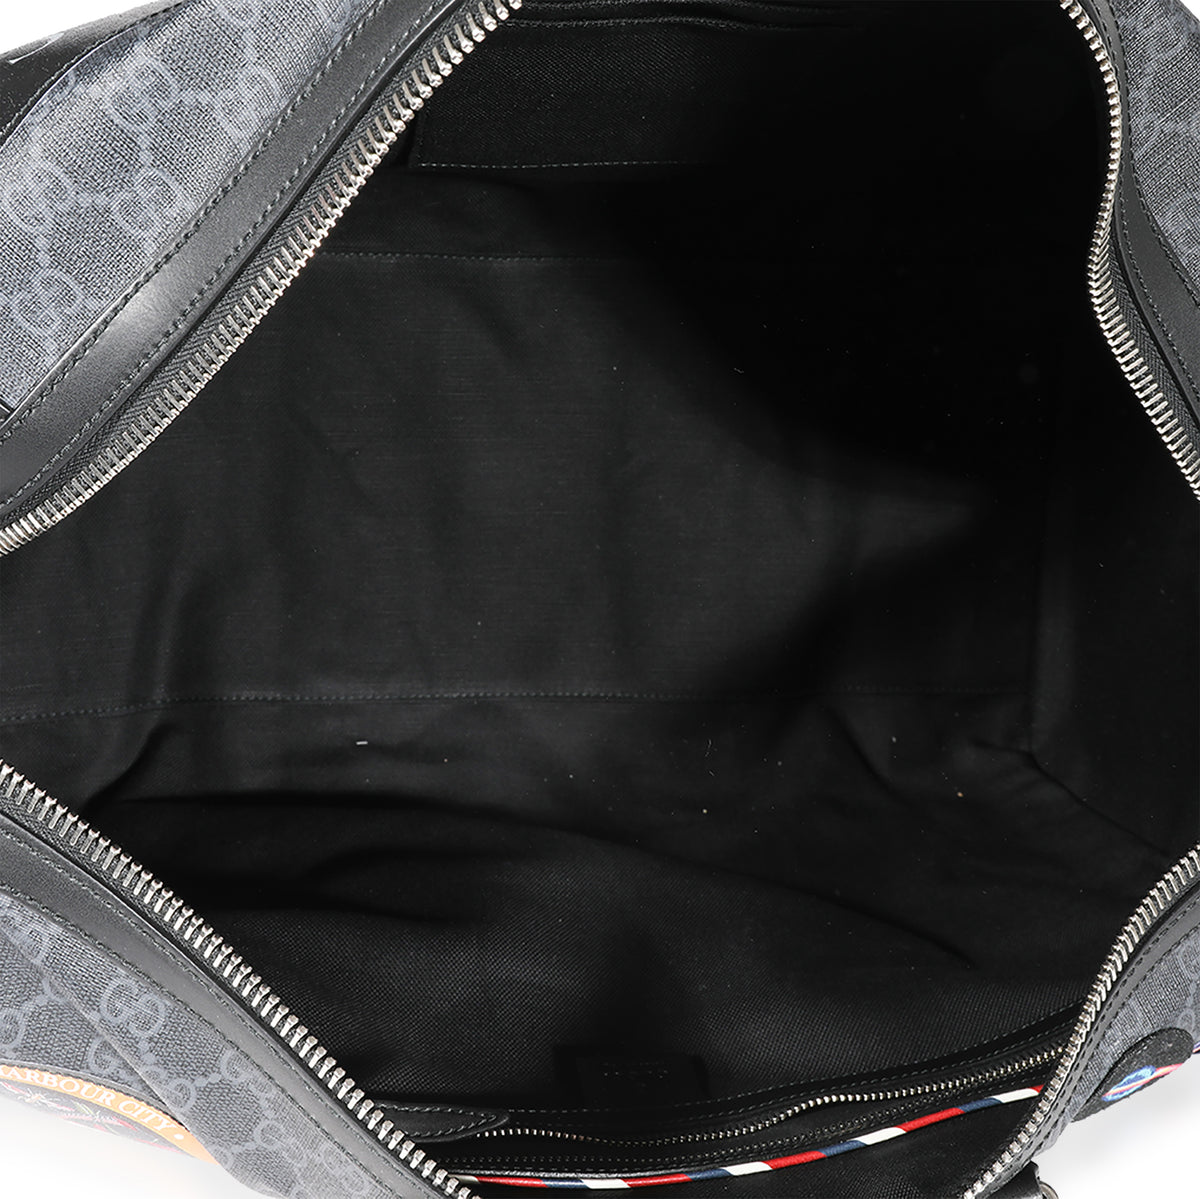 Black Large GG Supreme Carry-On Duffle Bag